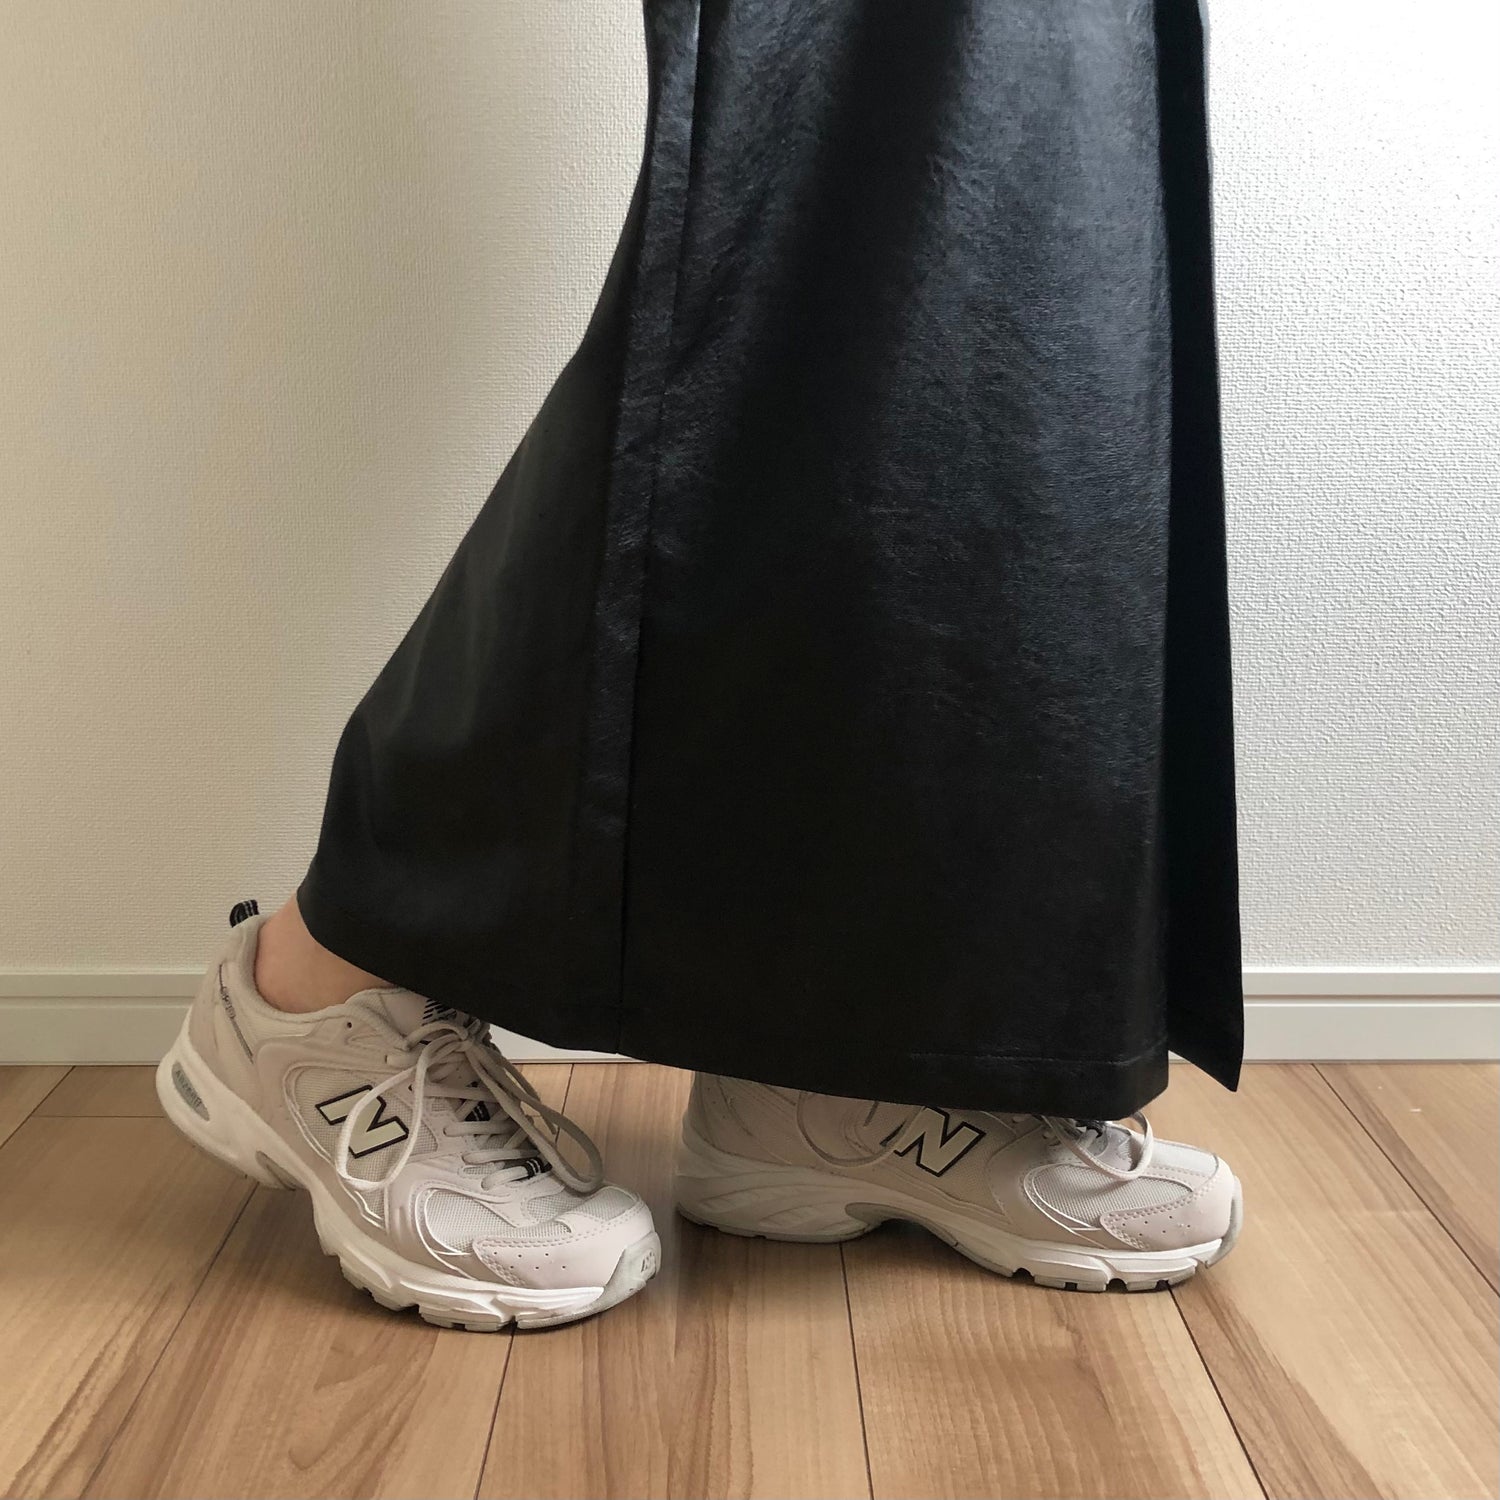 eco leather wrap skirt / black